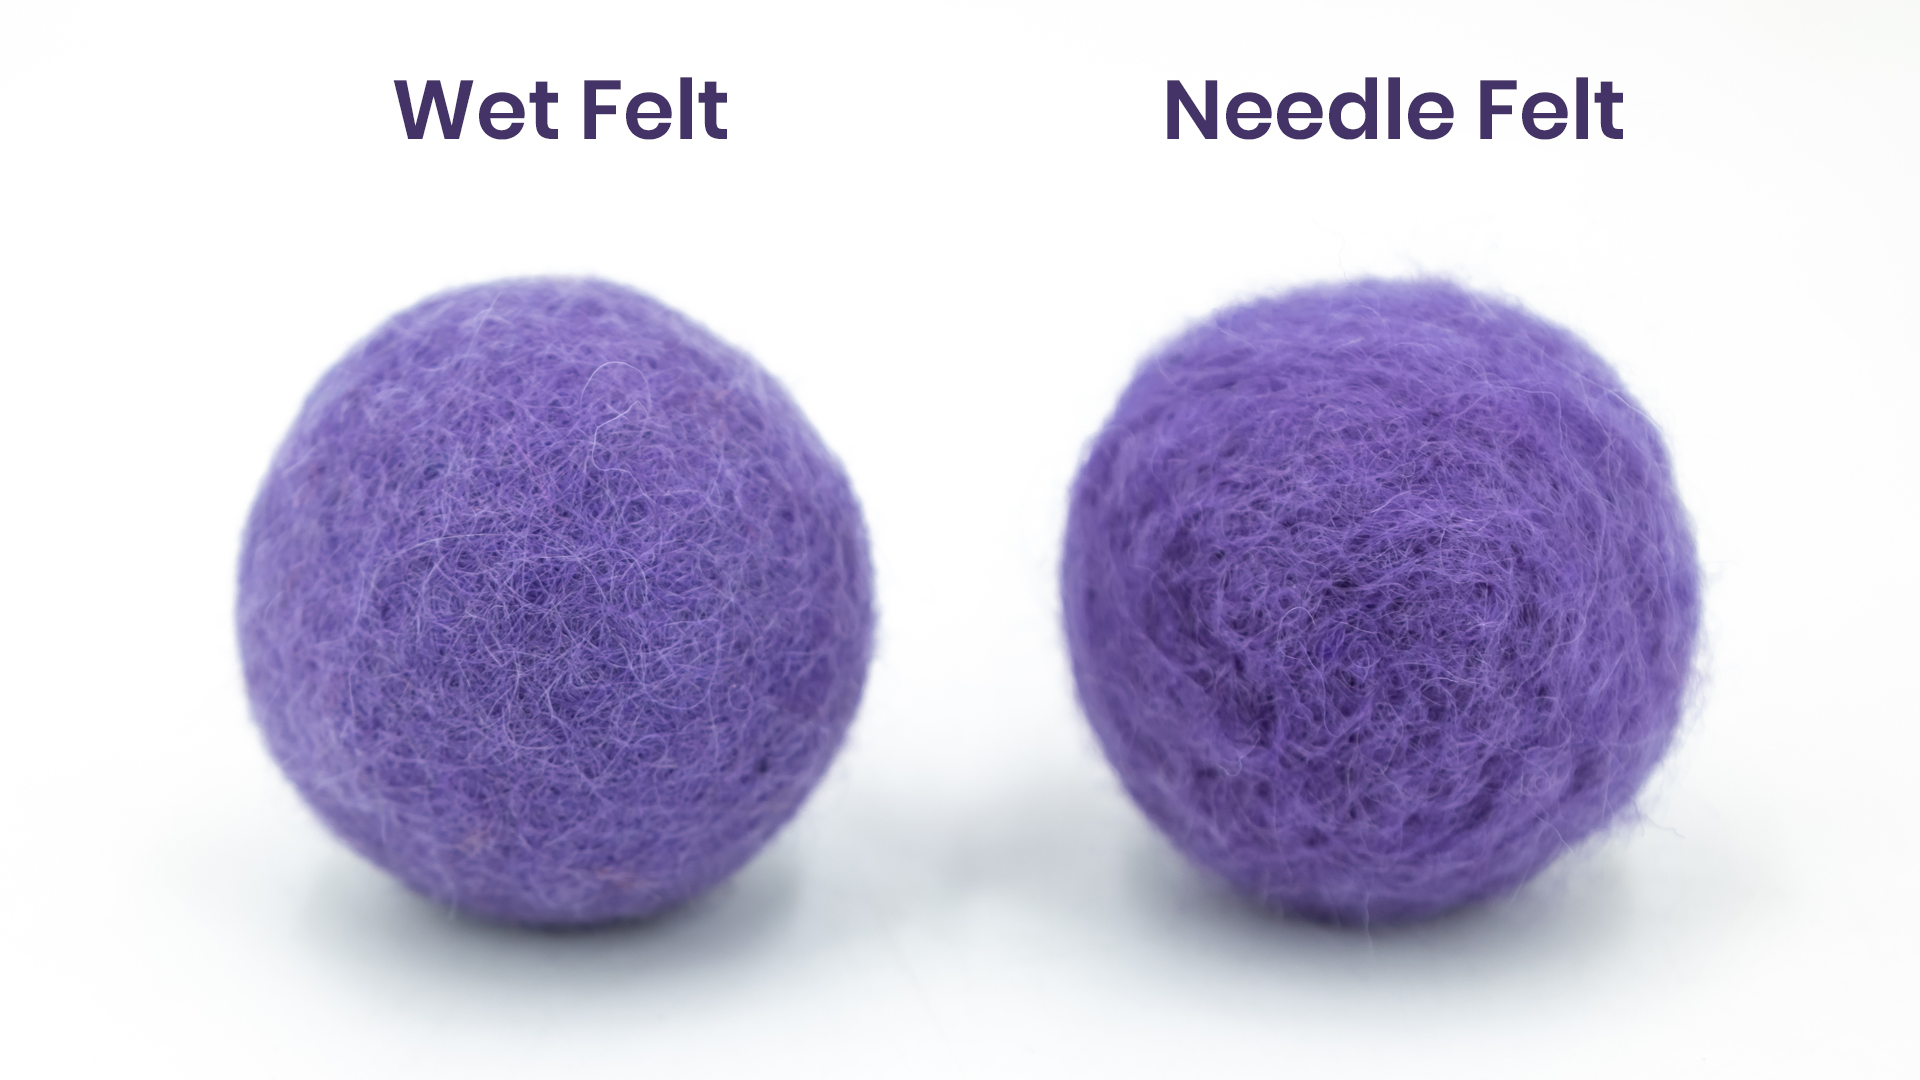 Core Wool + Large Wools - High Quality Needle Felting Kits, Wet